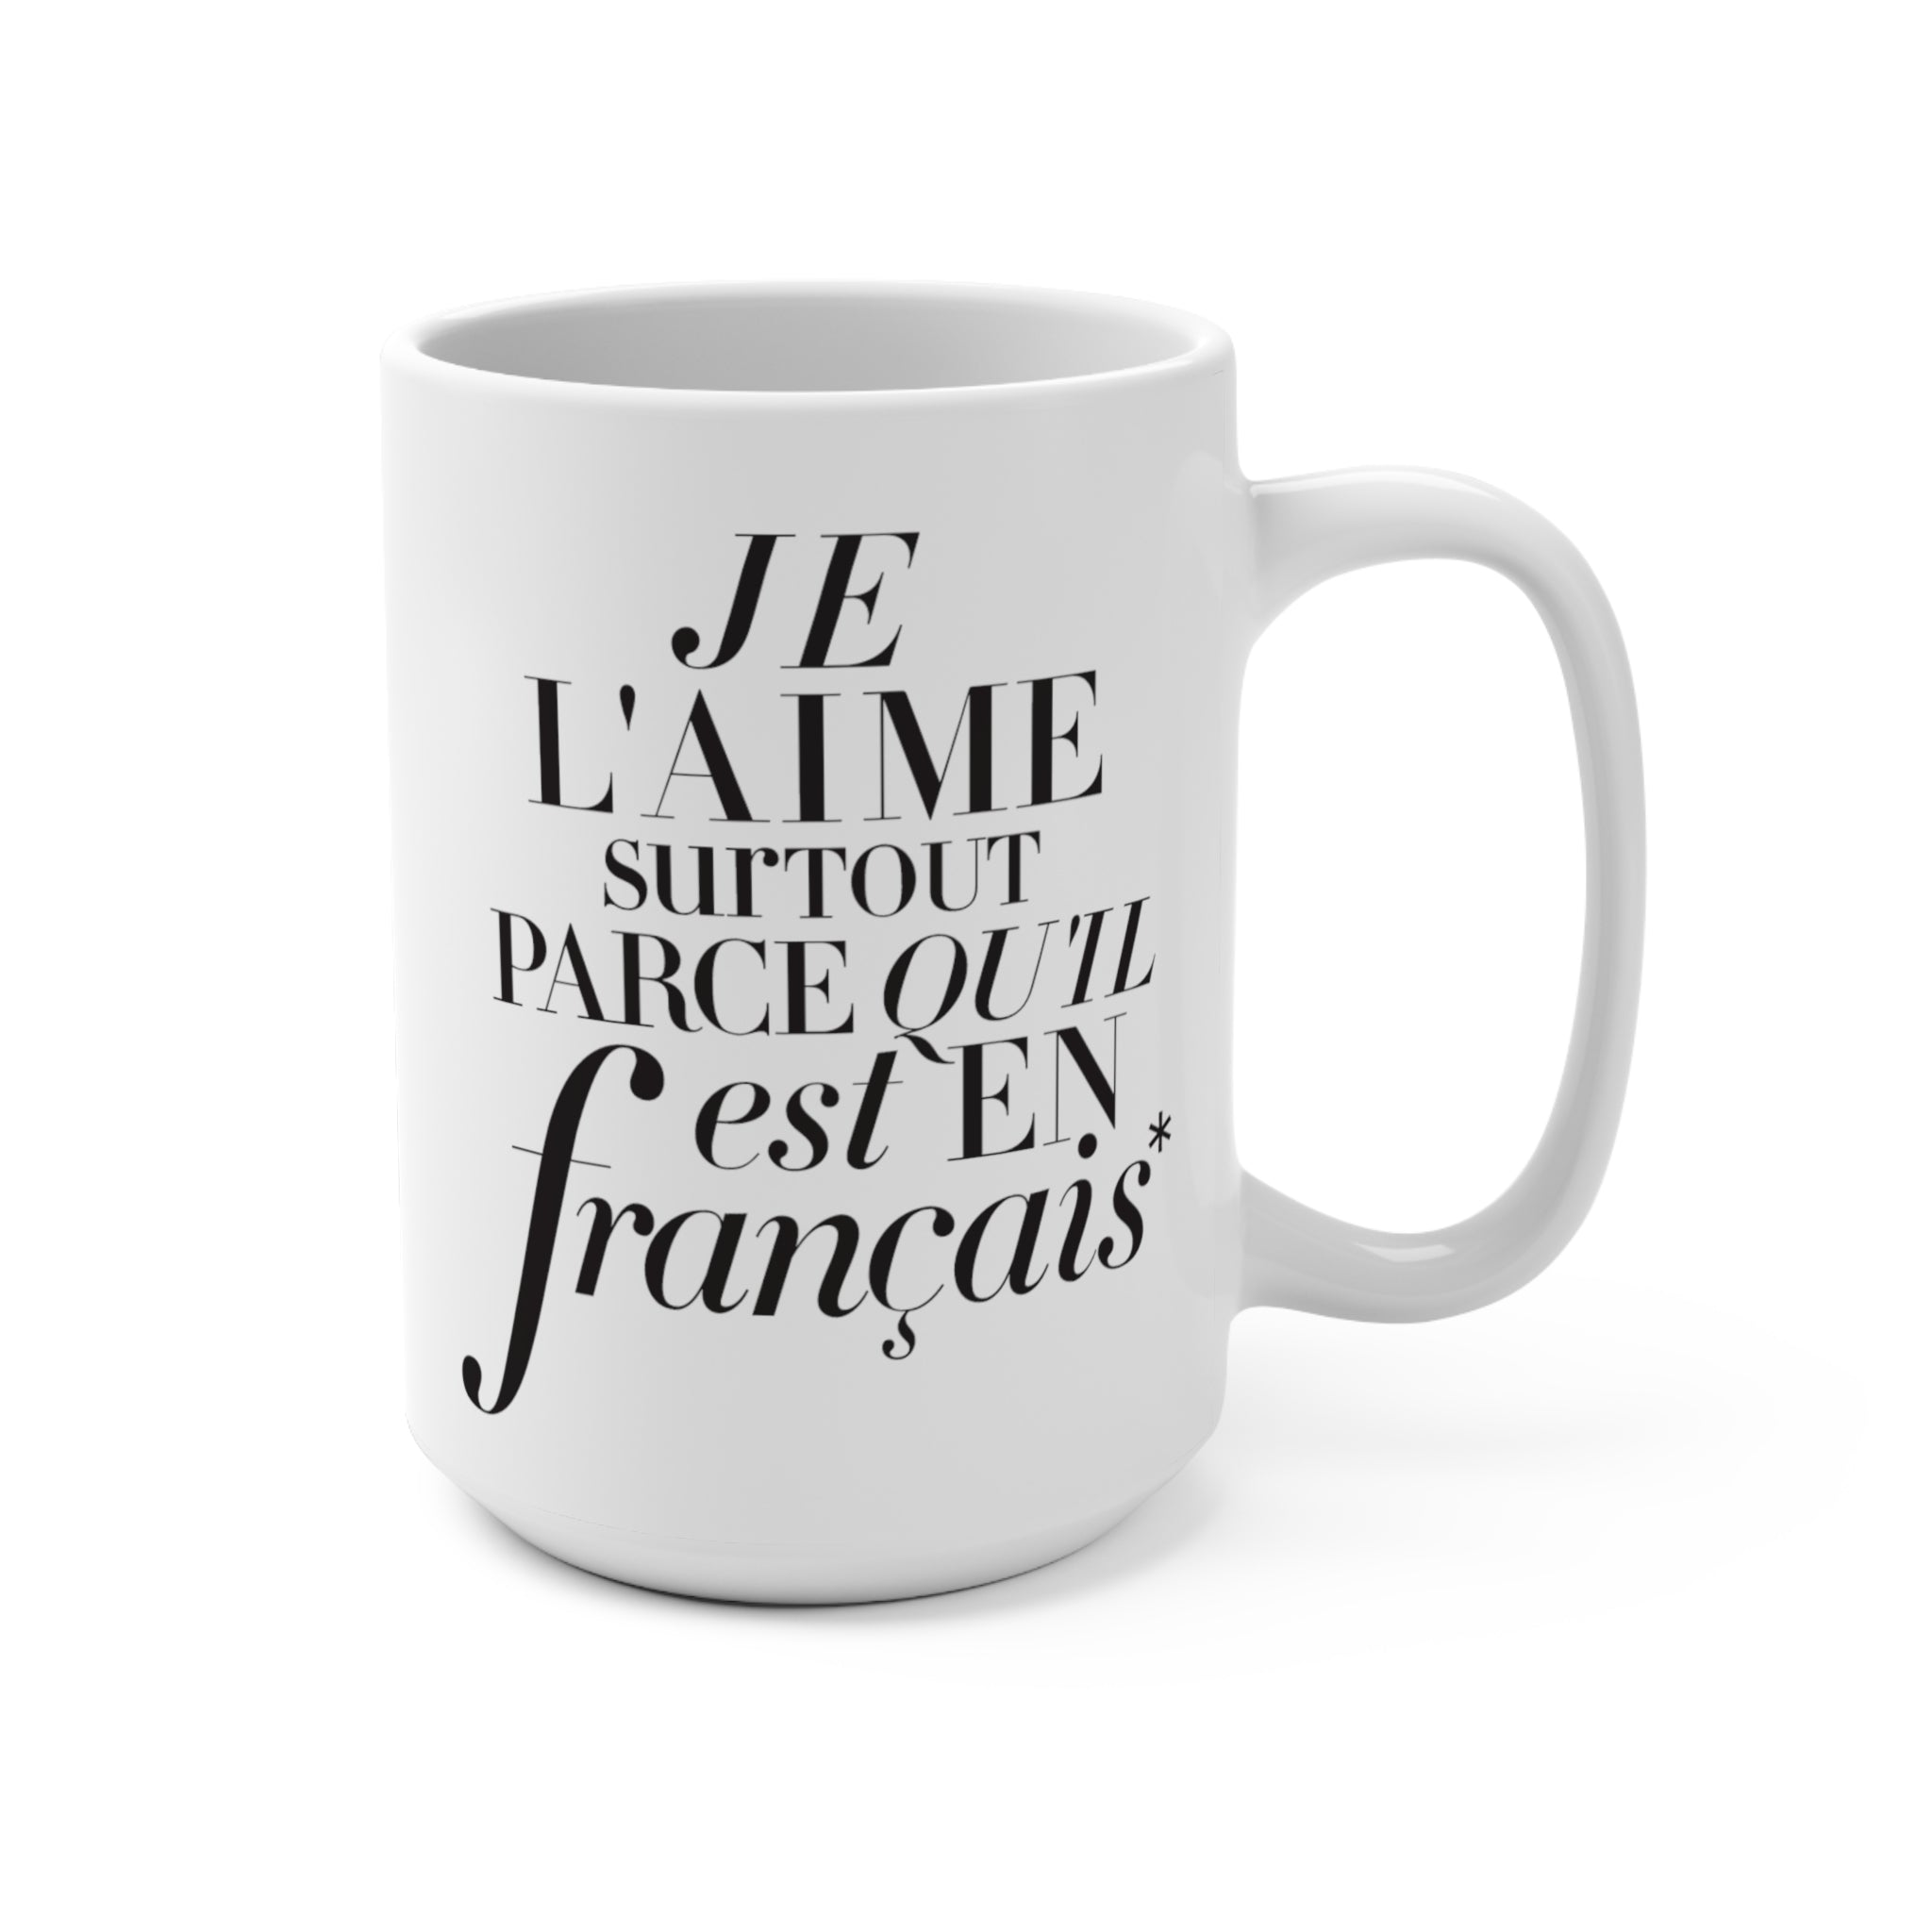 Mostly Because French Mug